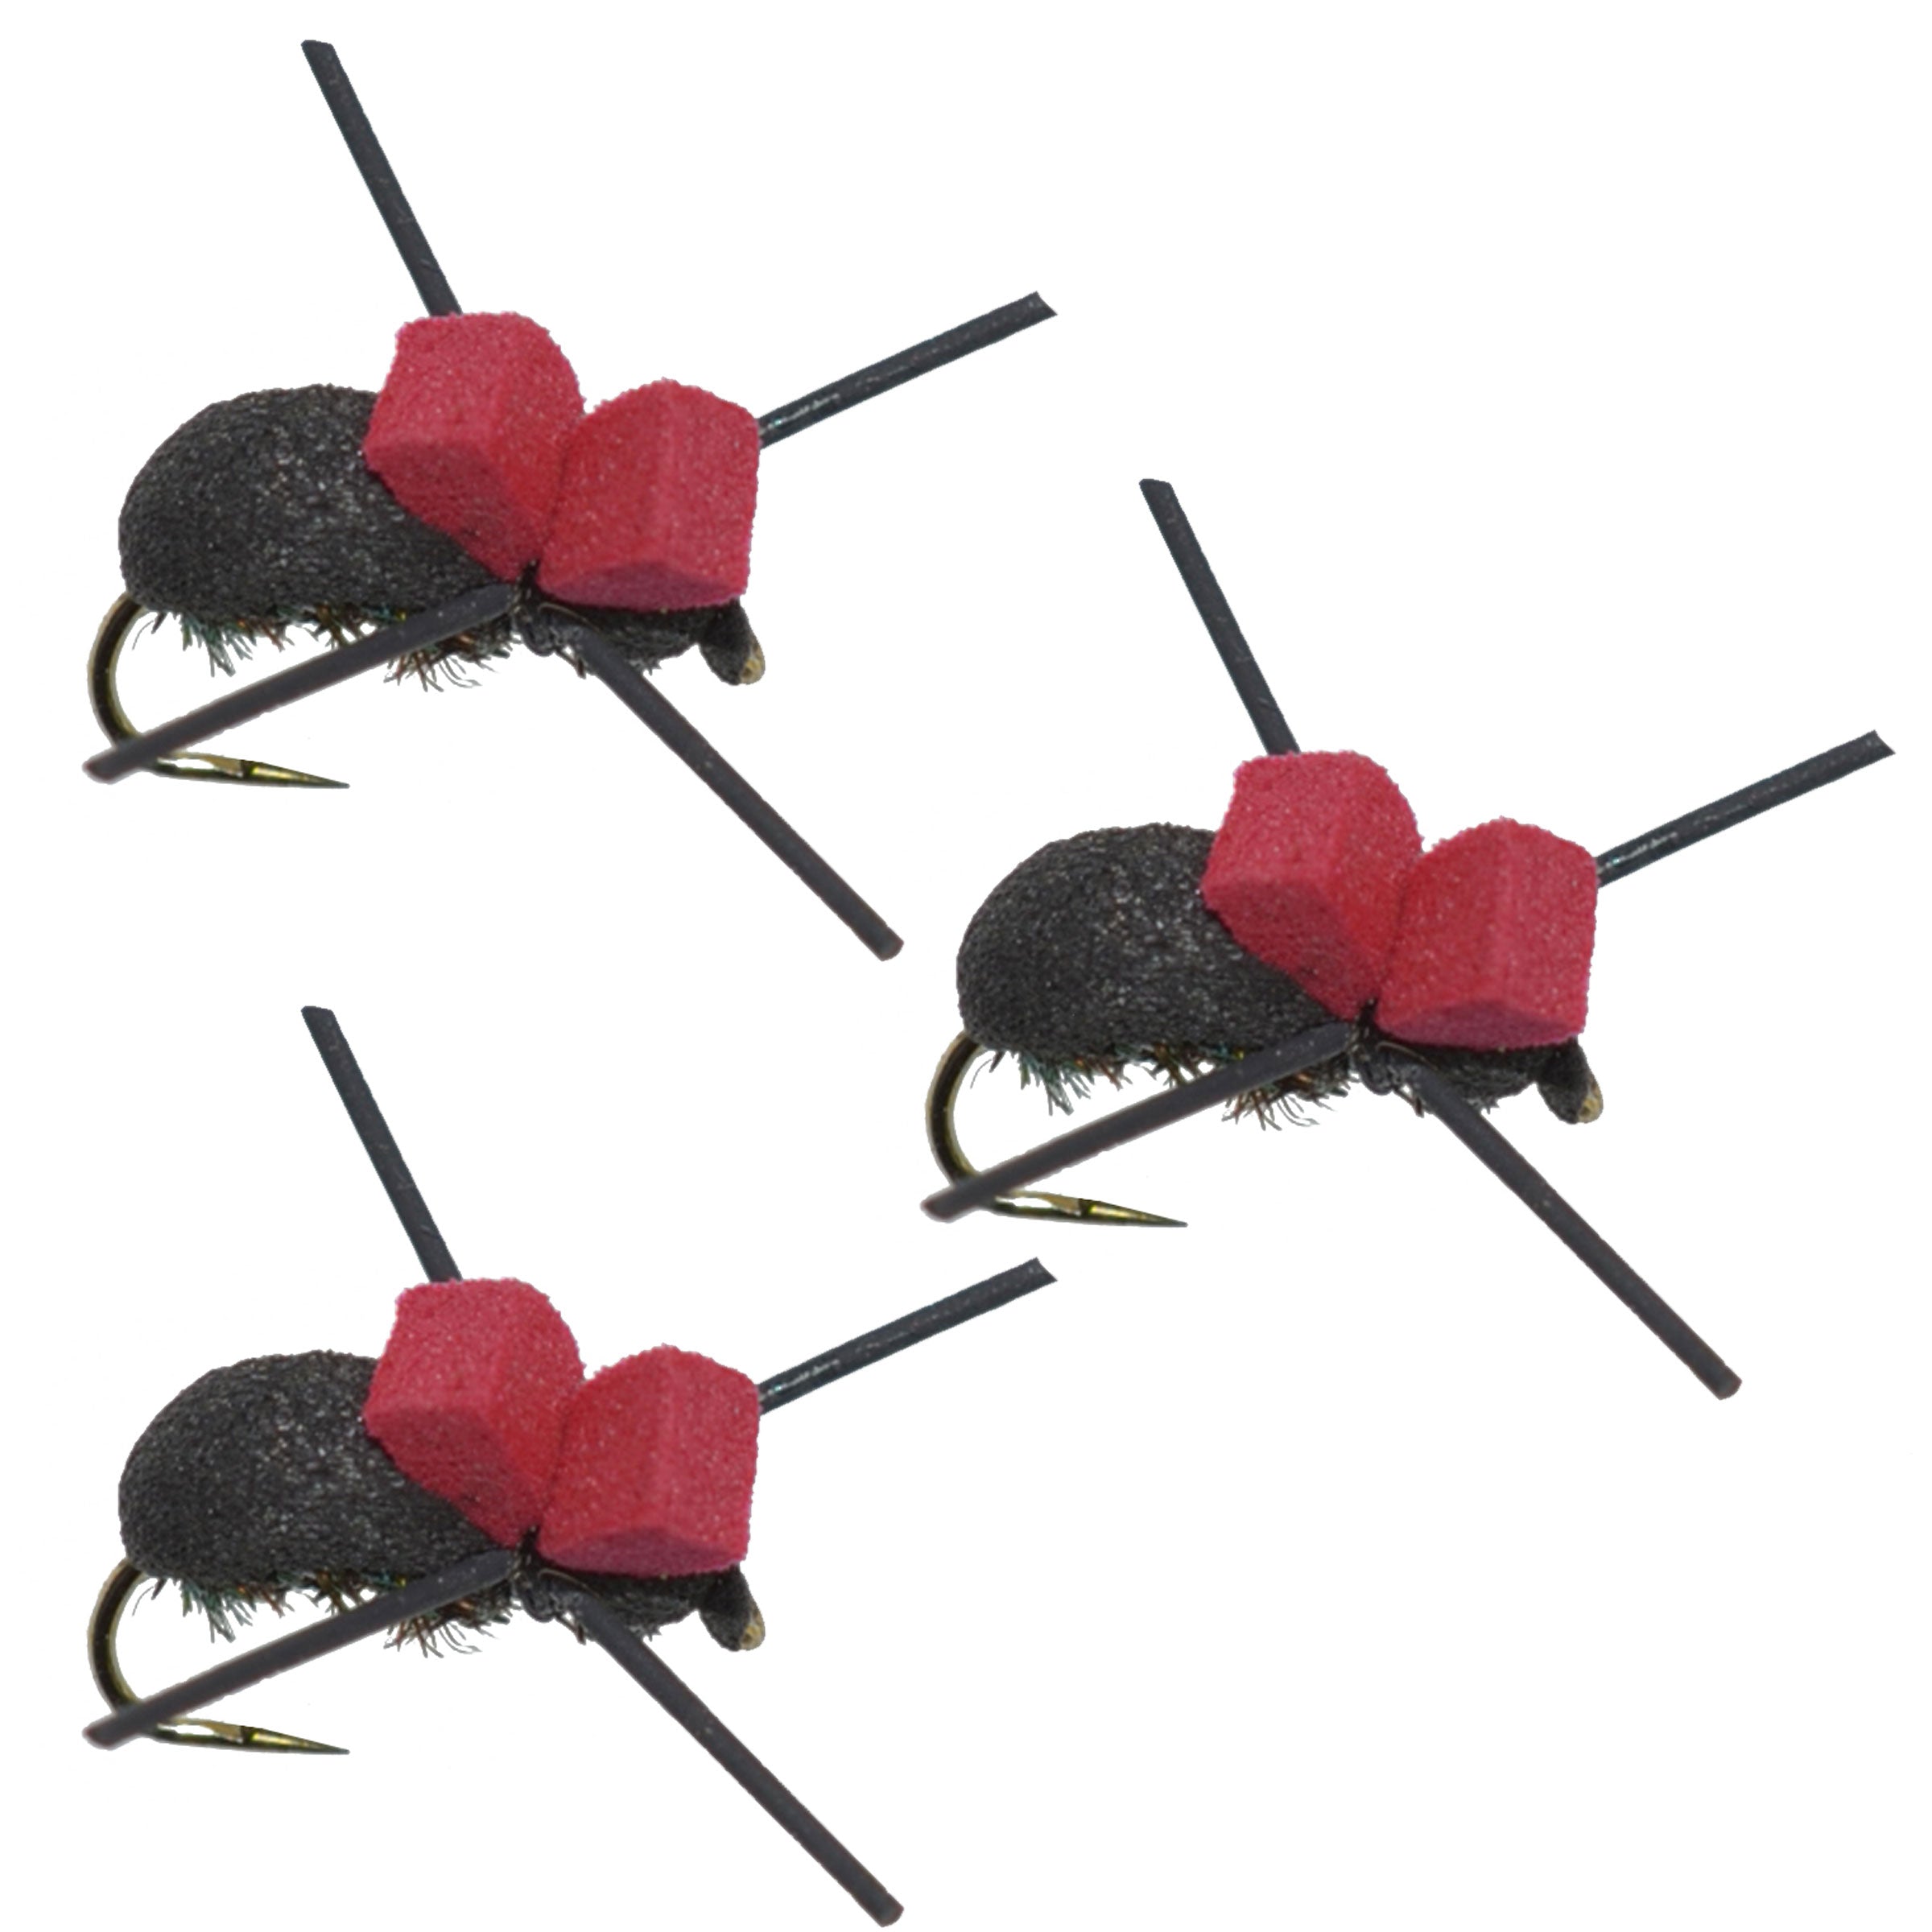 3 Pack Red Top Black Foam Beetle Terrestrial Trout Dry Fly Fishing Flies - Hook Size 14